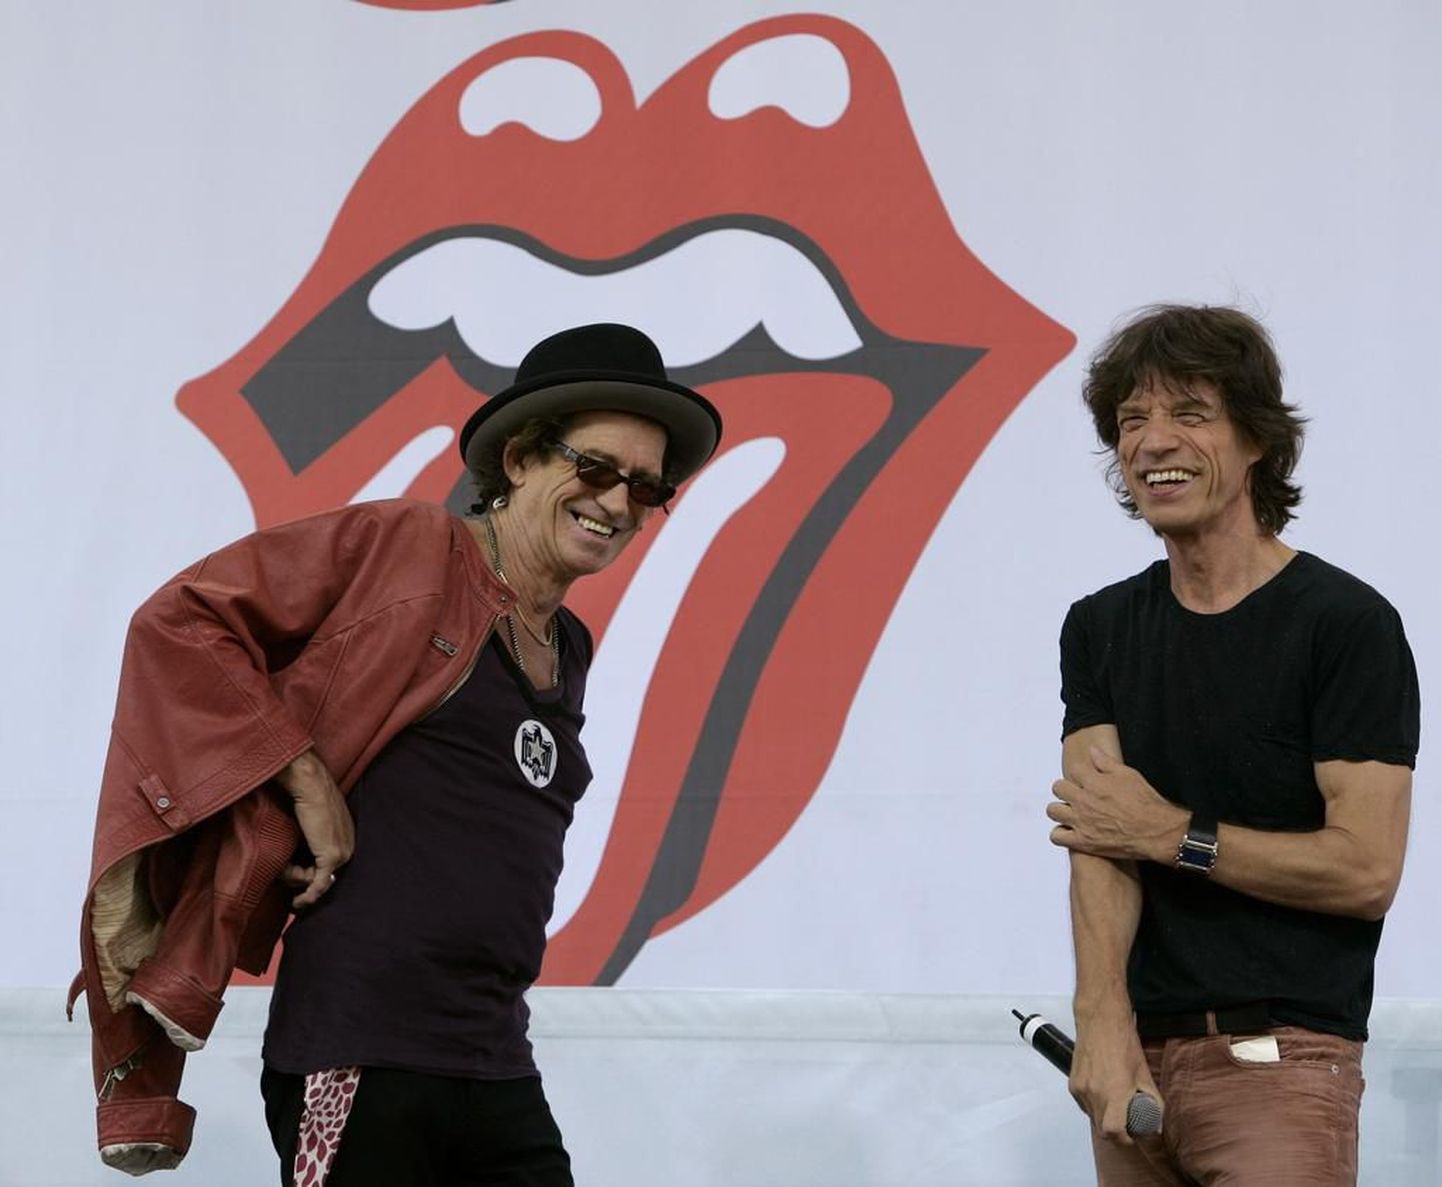 Ansambli «The Rolling Stones» liikmed Mick Jagger ja Keith Richards uut turneed tutvustamas.